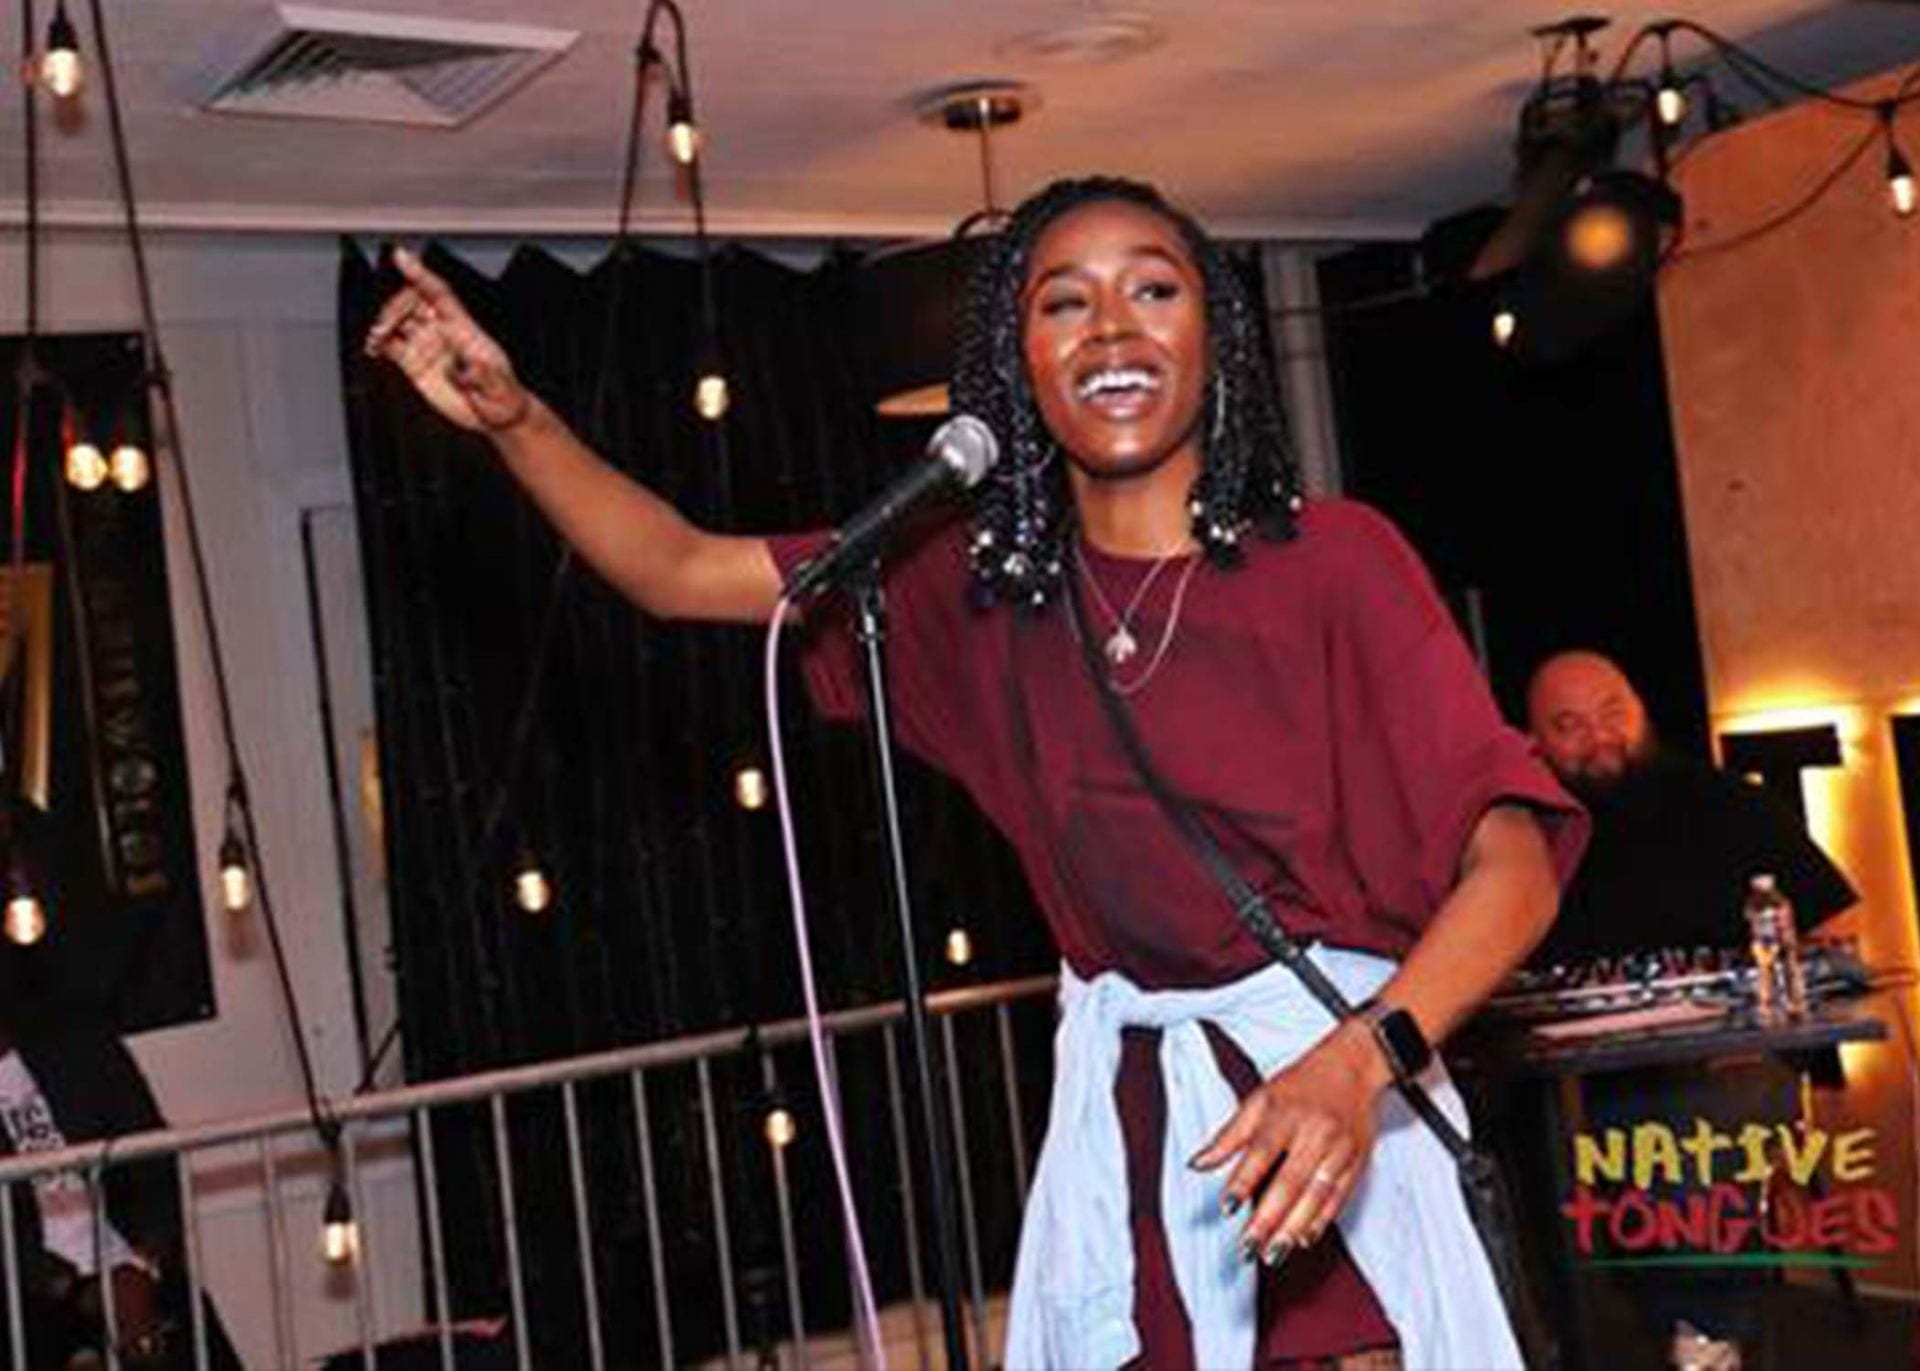 Spoken word artist Shameaca Moore on stage.